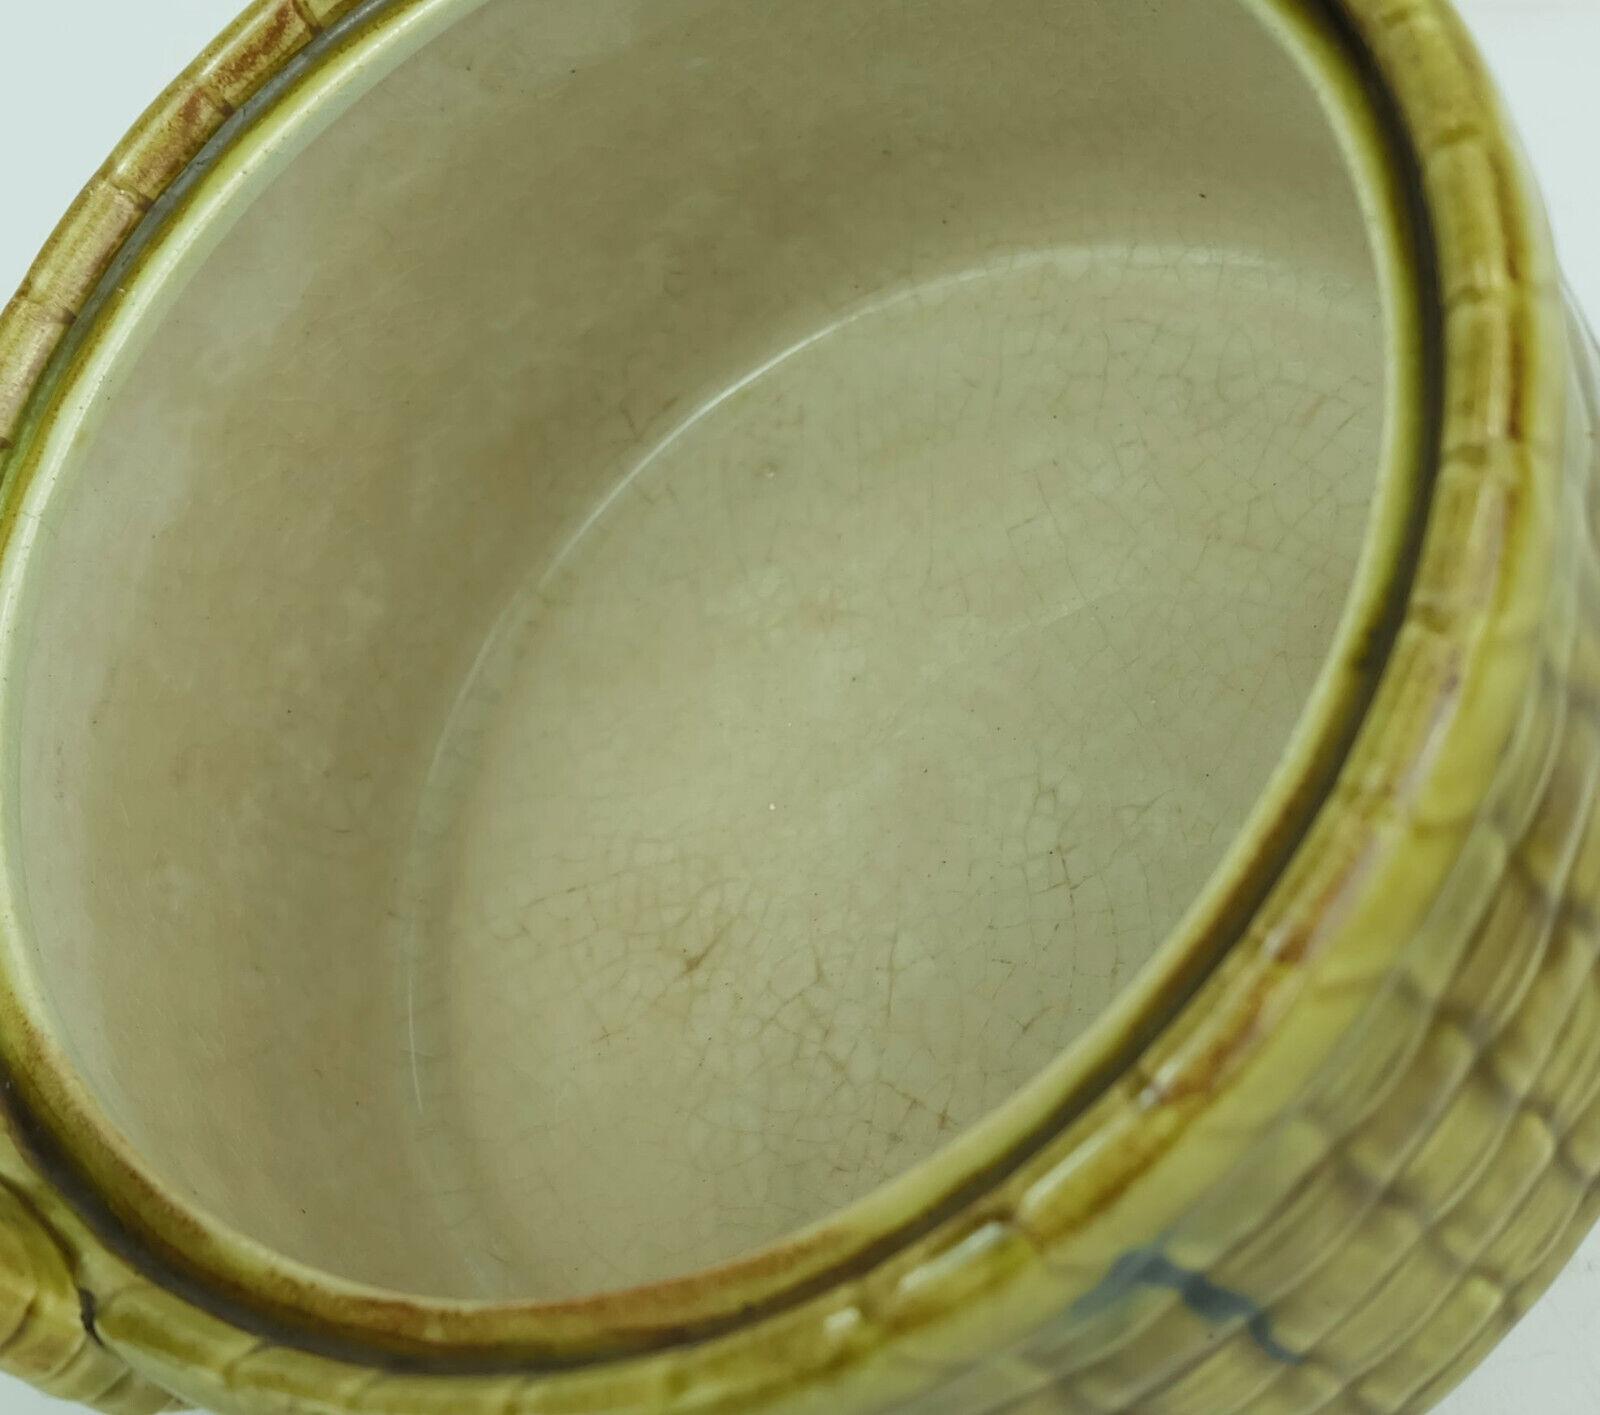 altfranz�ösische Sarreguemines Majolika JAR mit Deckel 1920er Jahre Keramik Keksdose 2